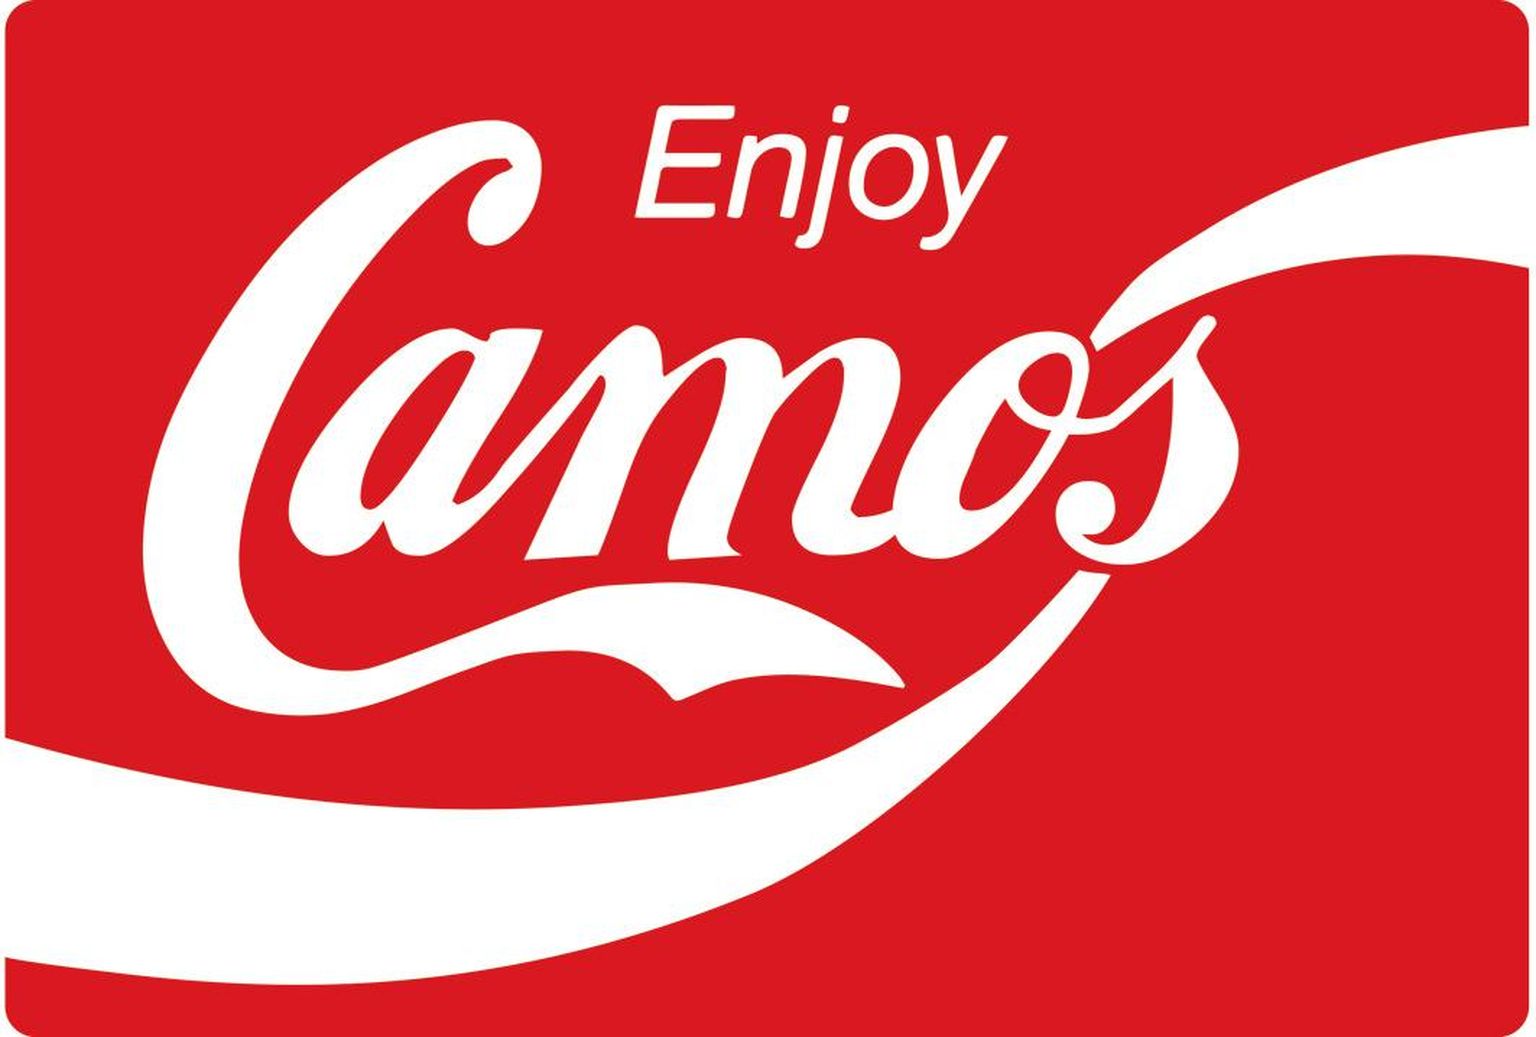 Enjoy Camos